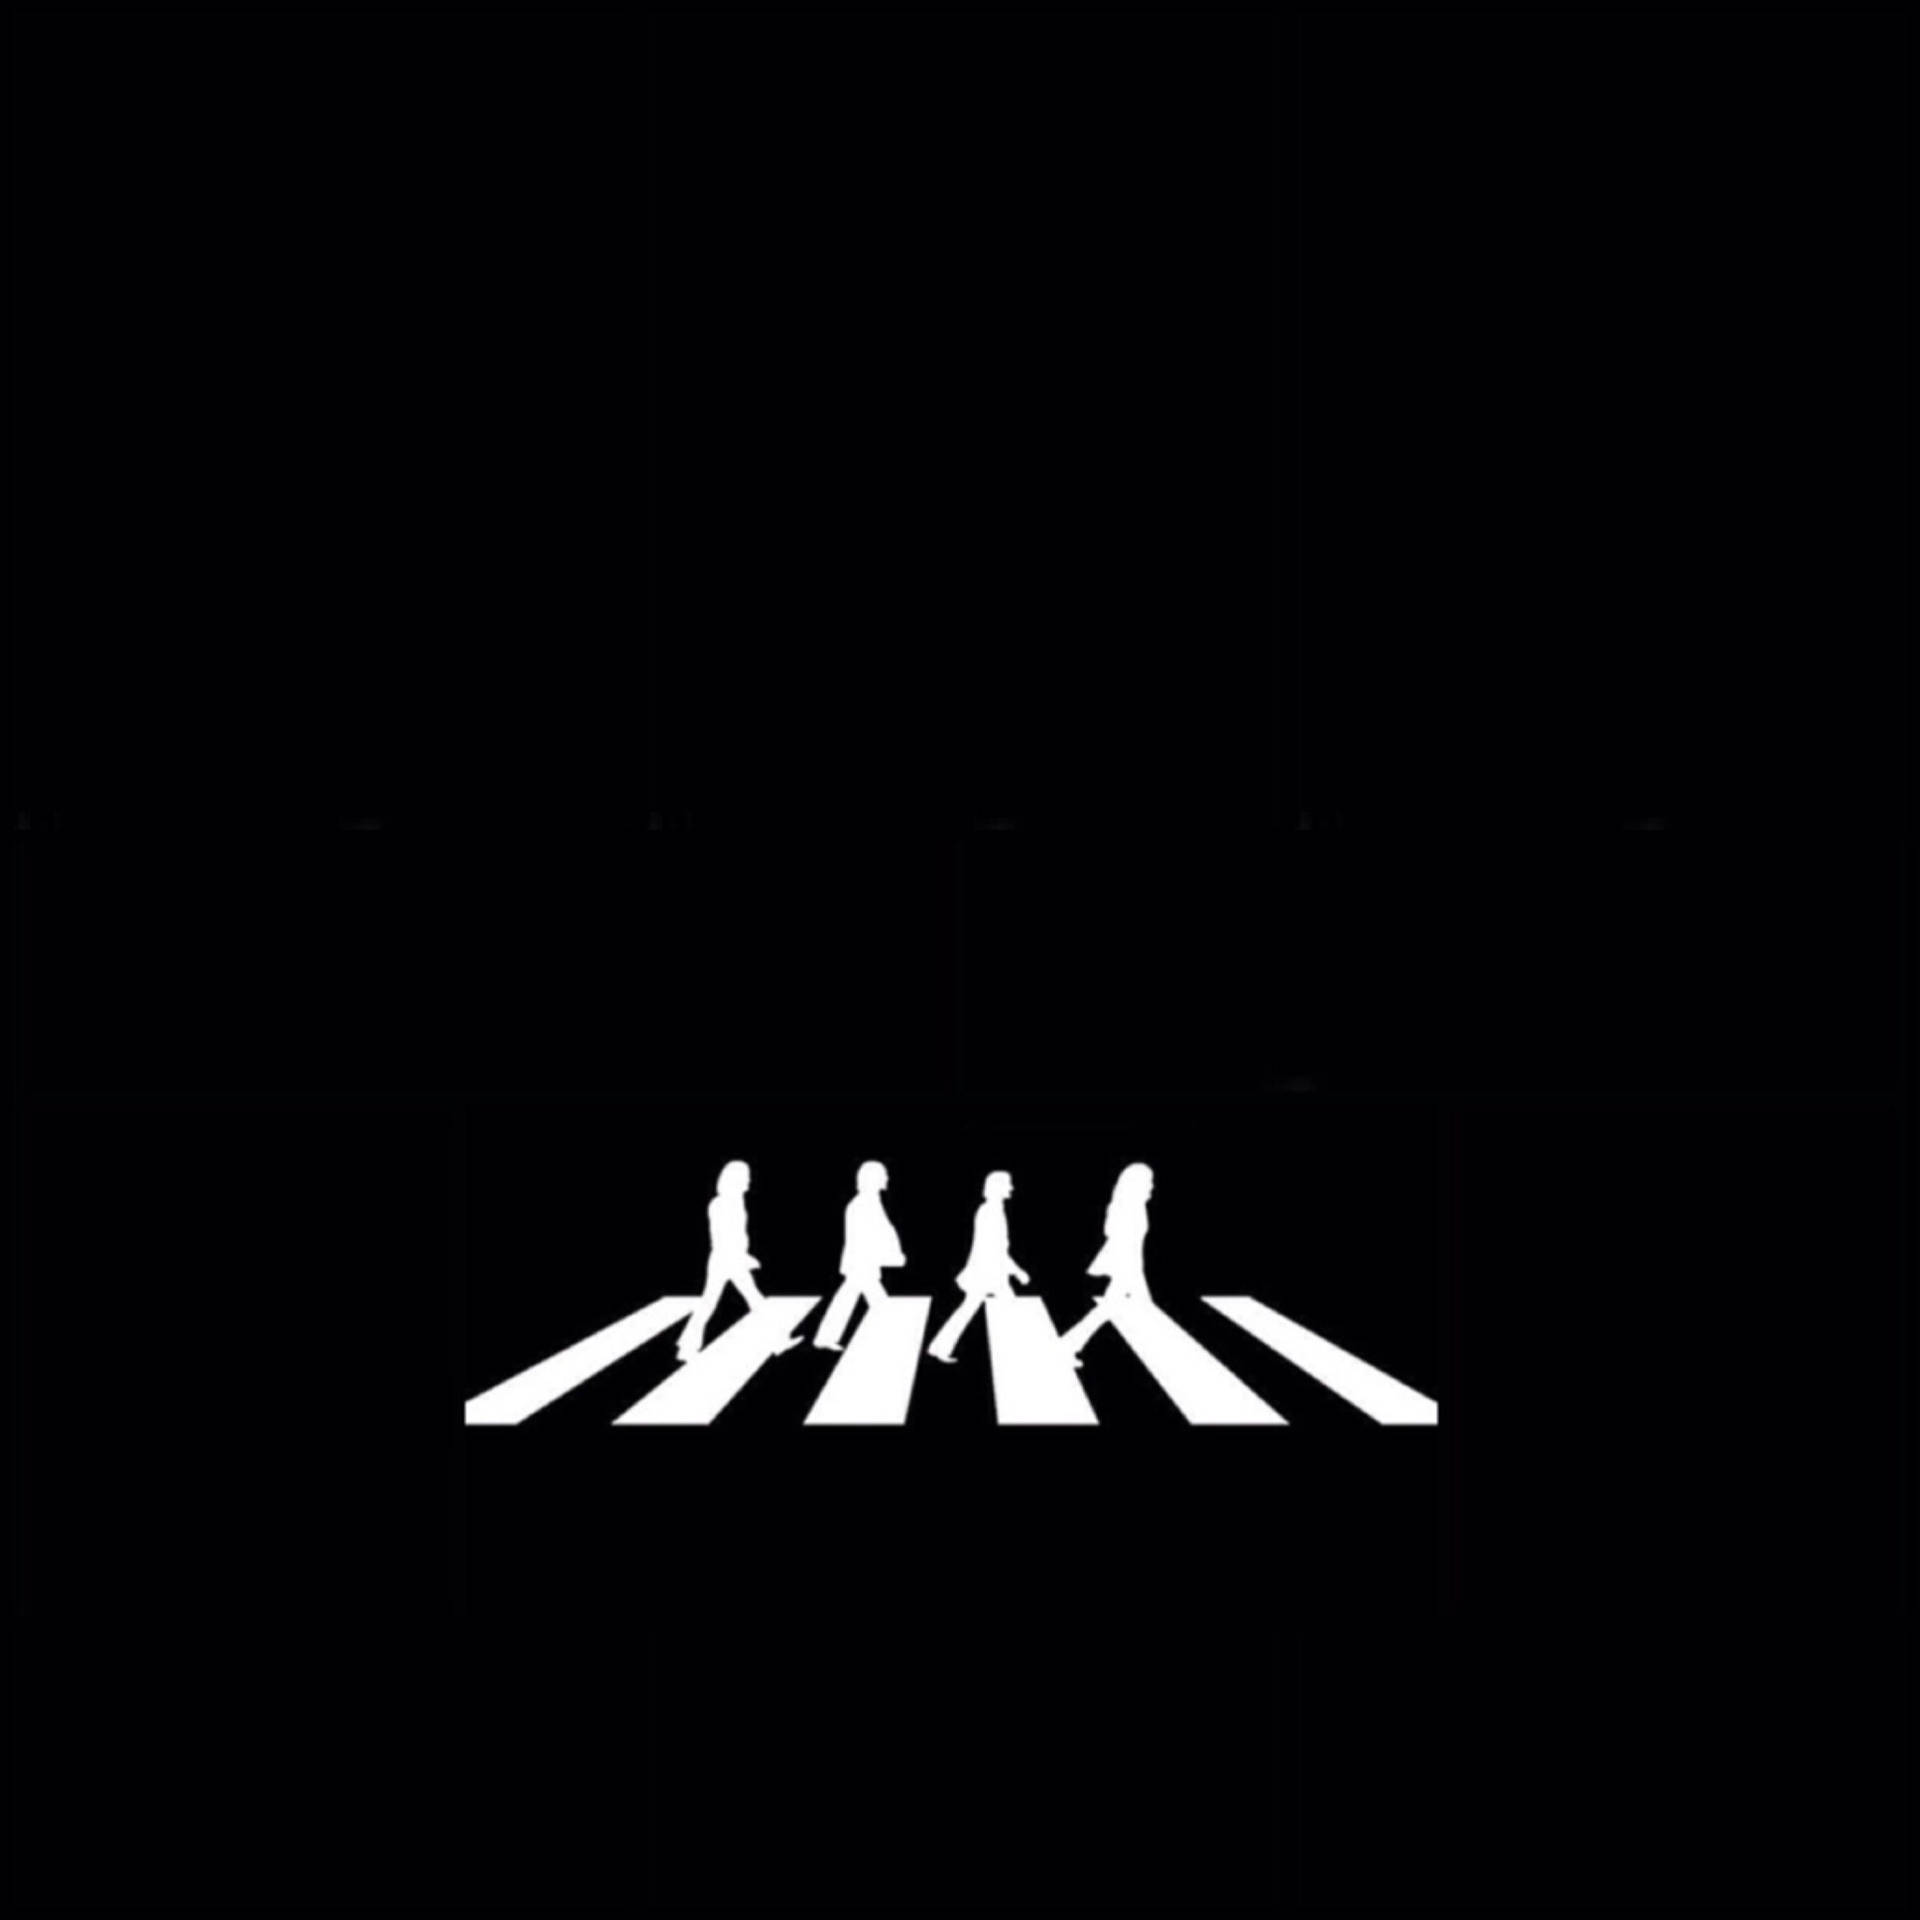 Beatles Minimalist Abbey Road Background